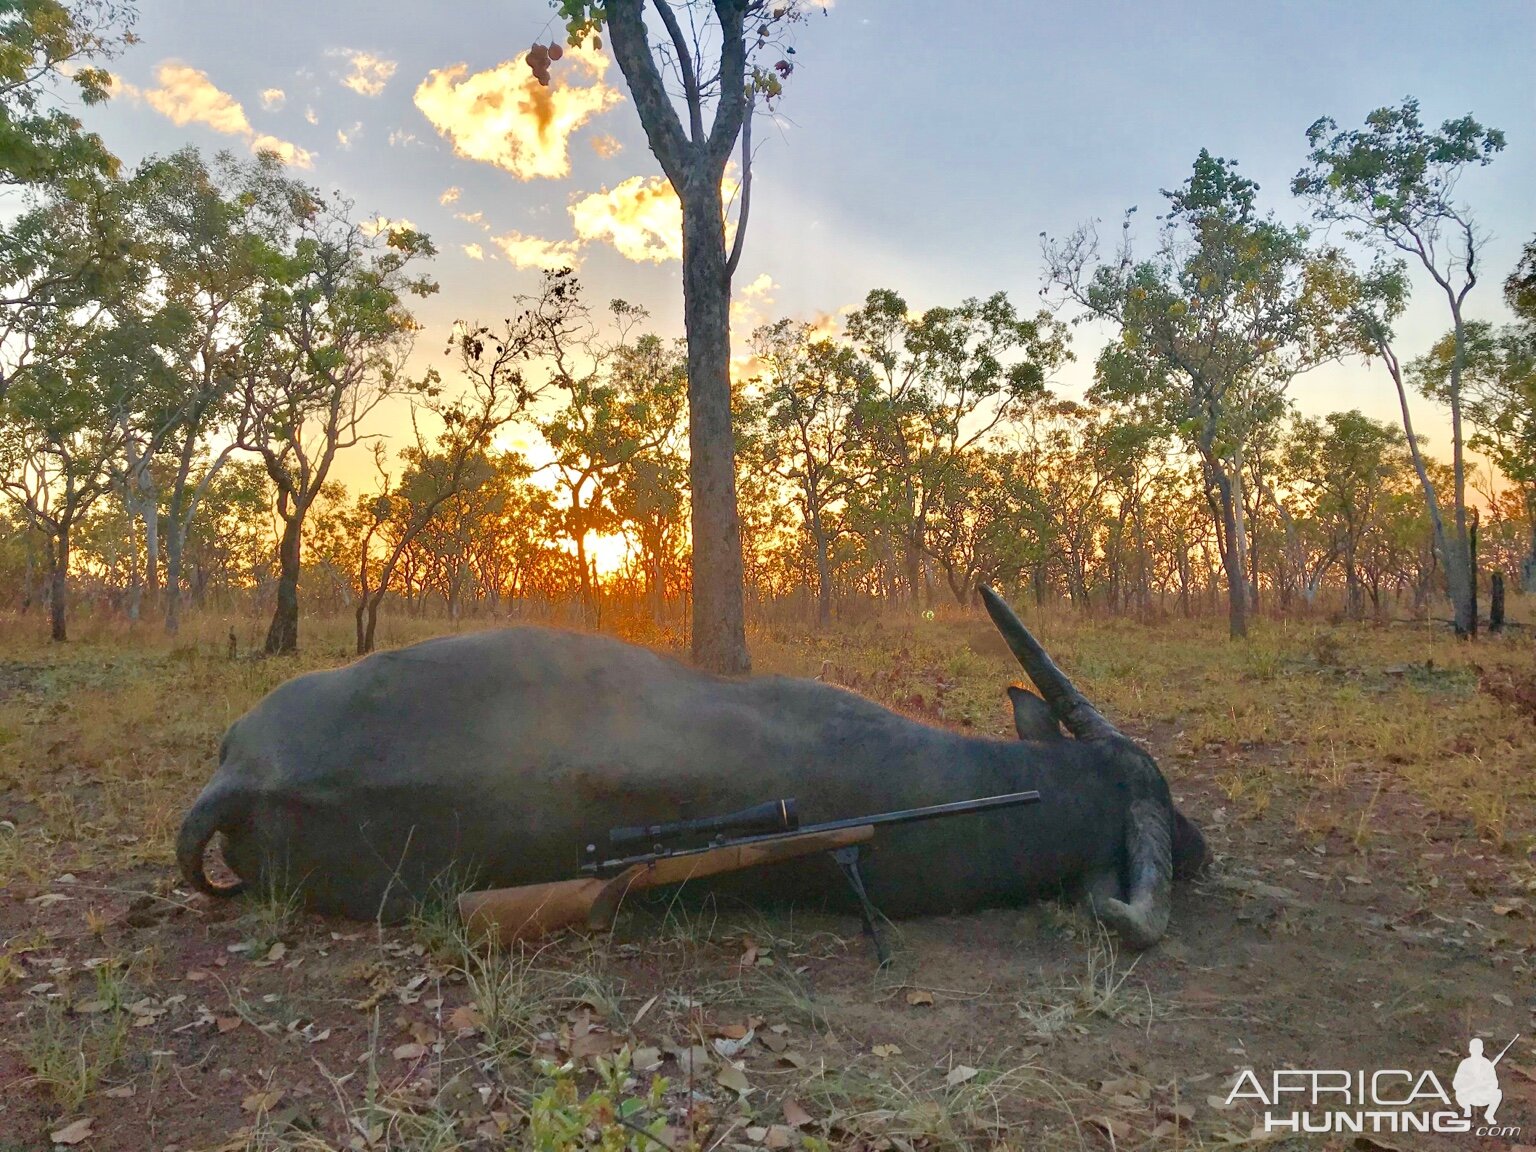 Asiatic Water Buffalo Hunt Australia